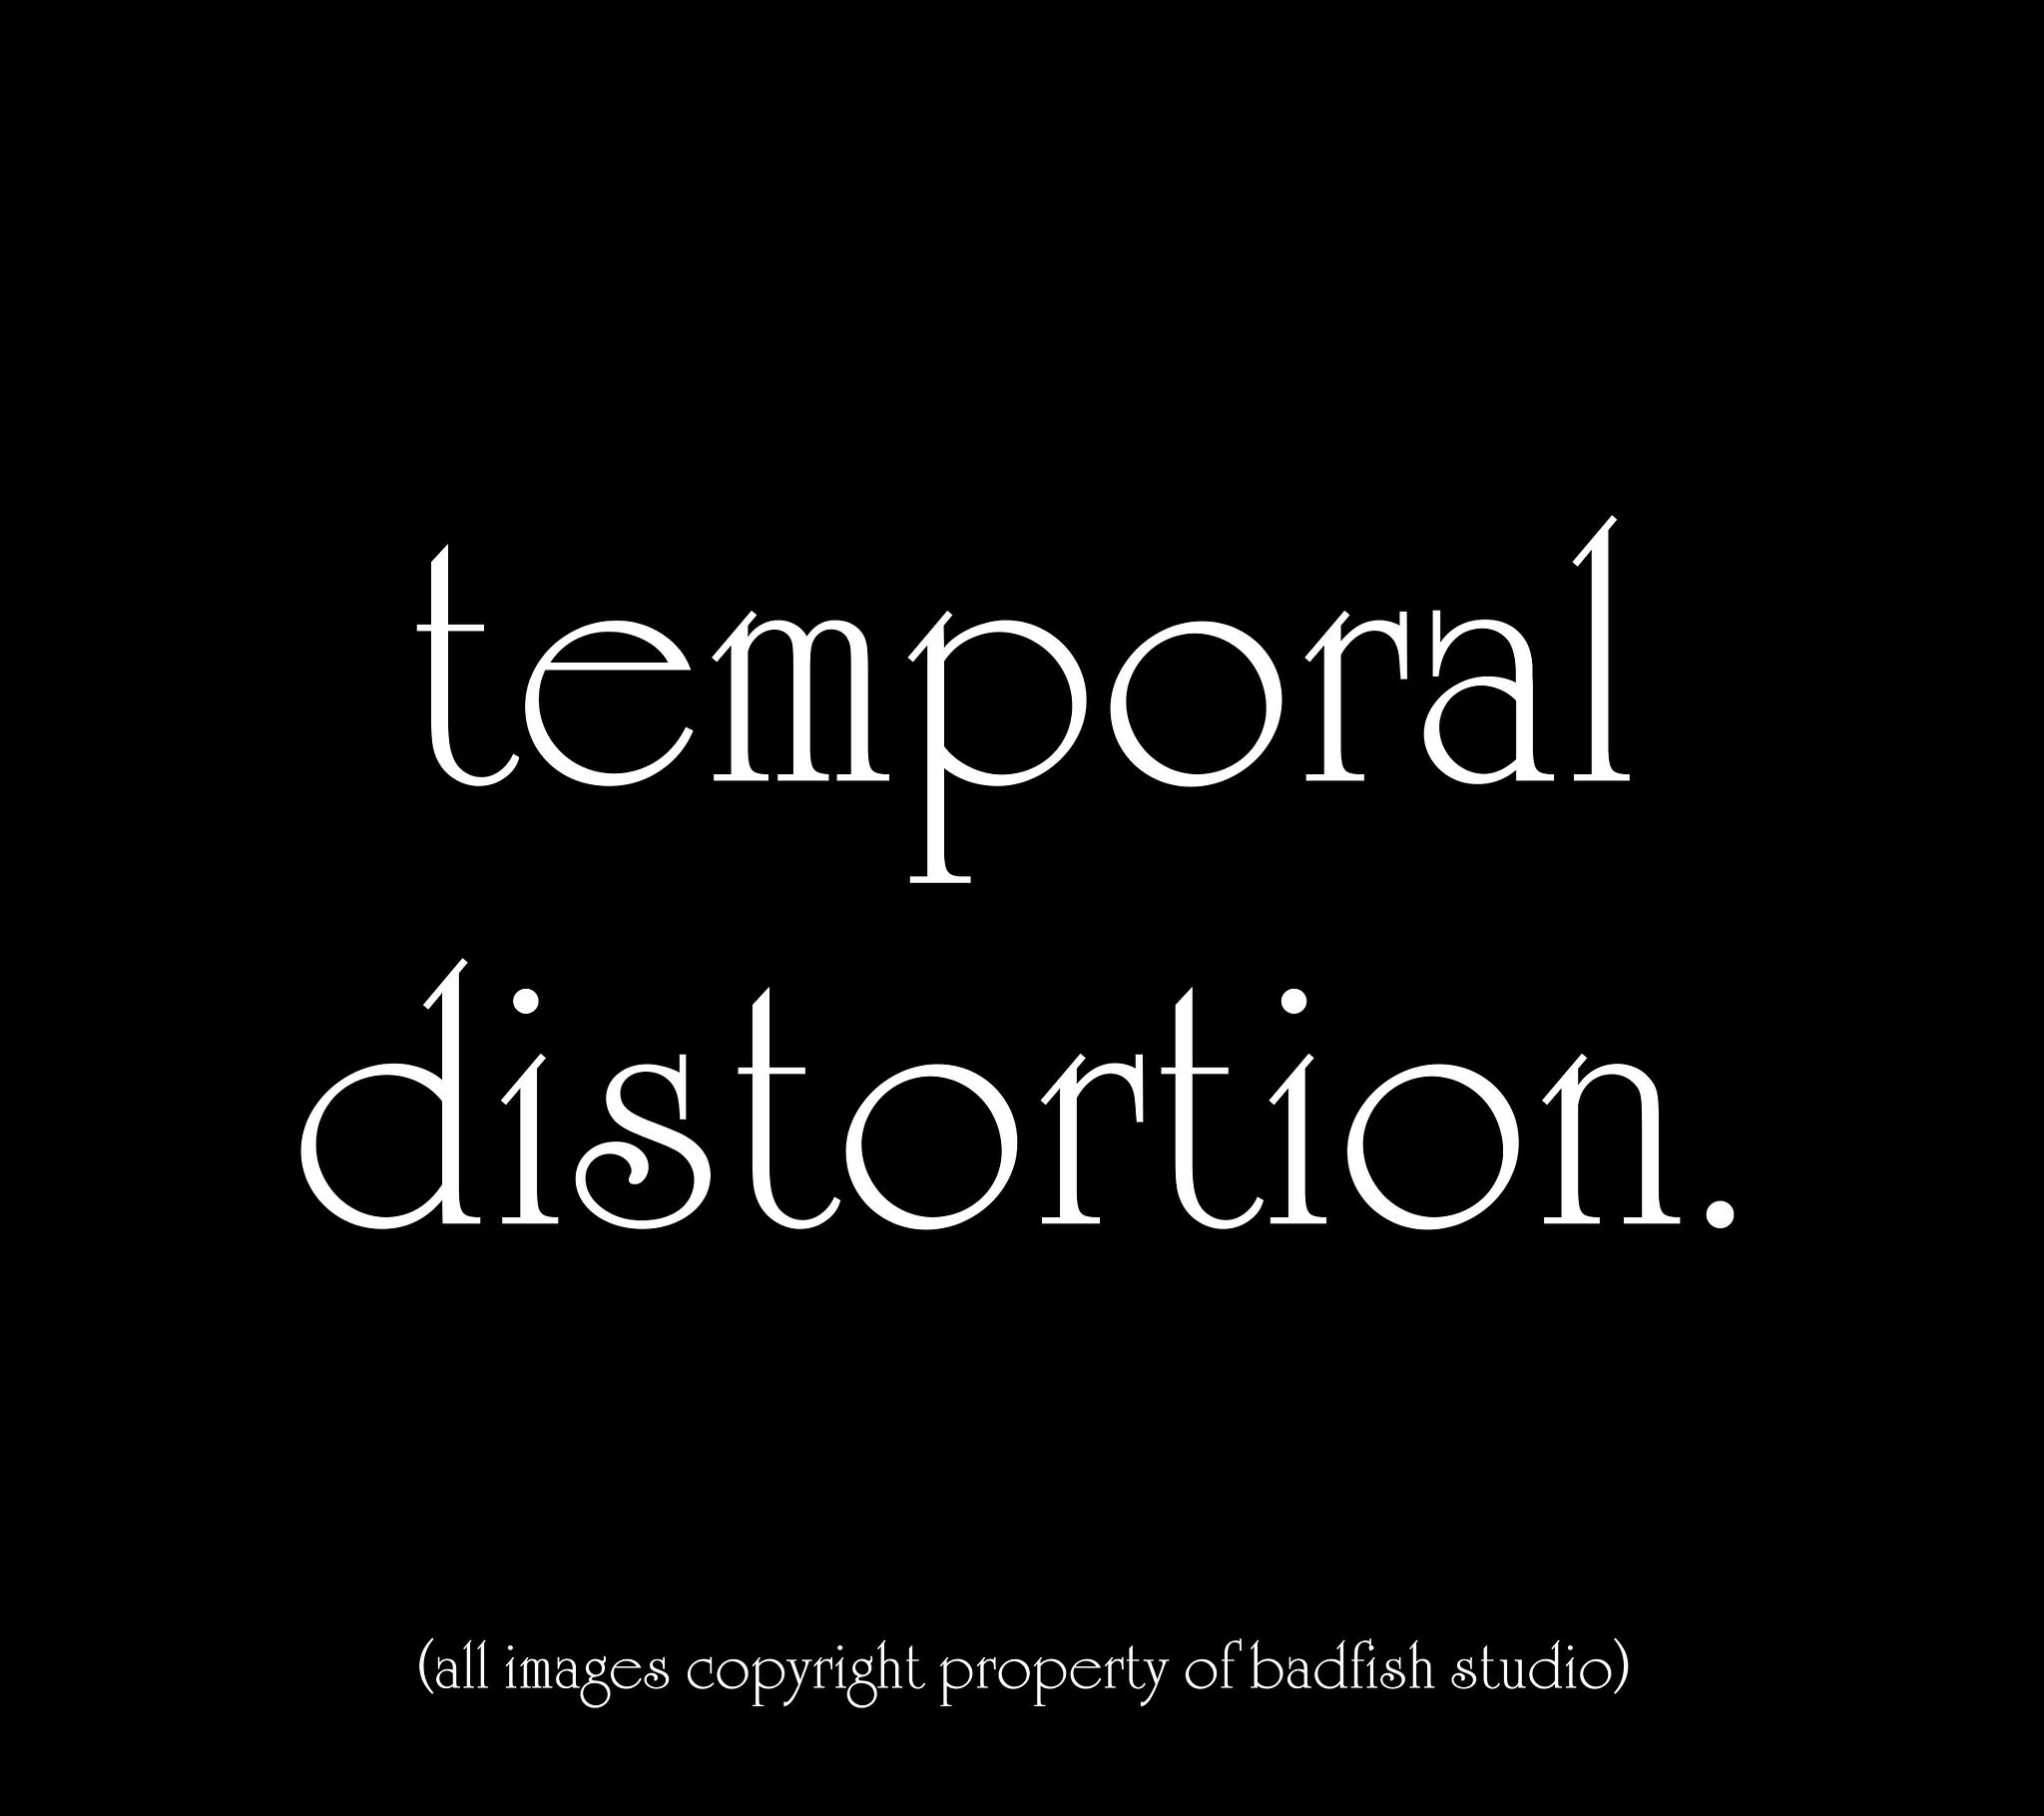 temporal distortion